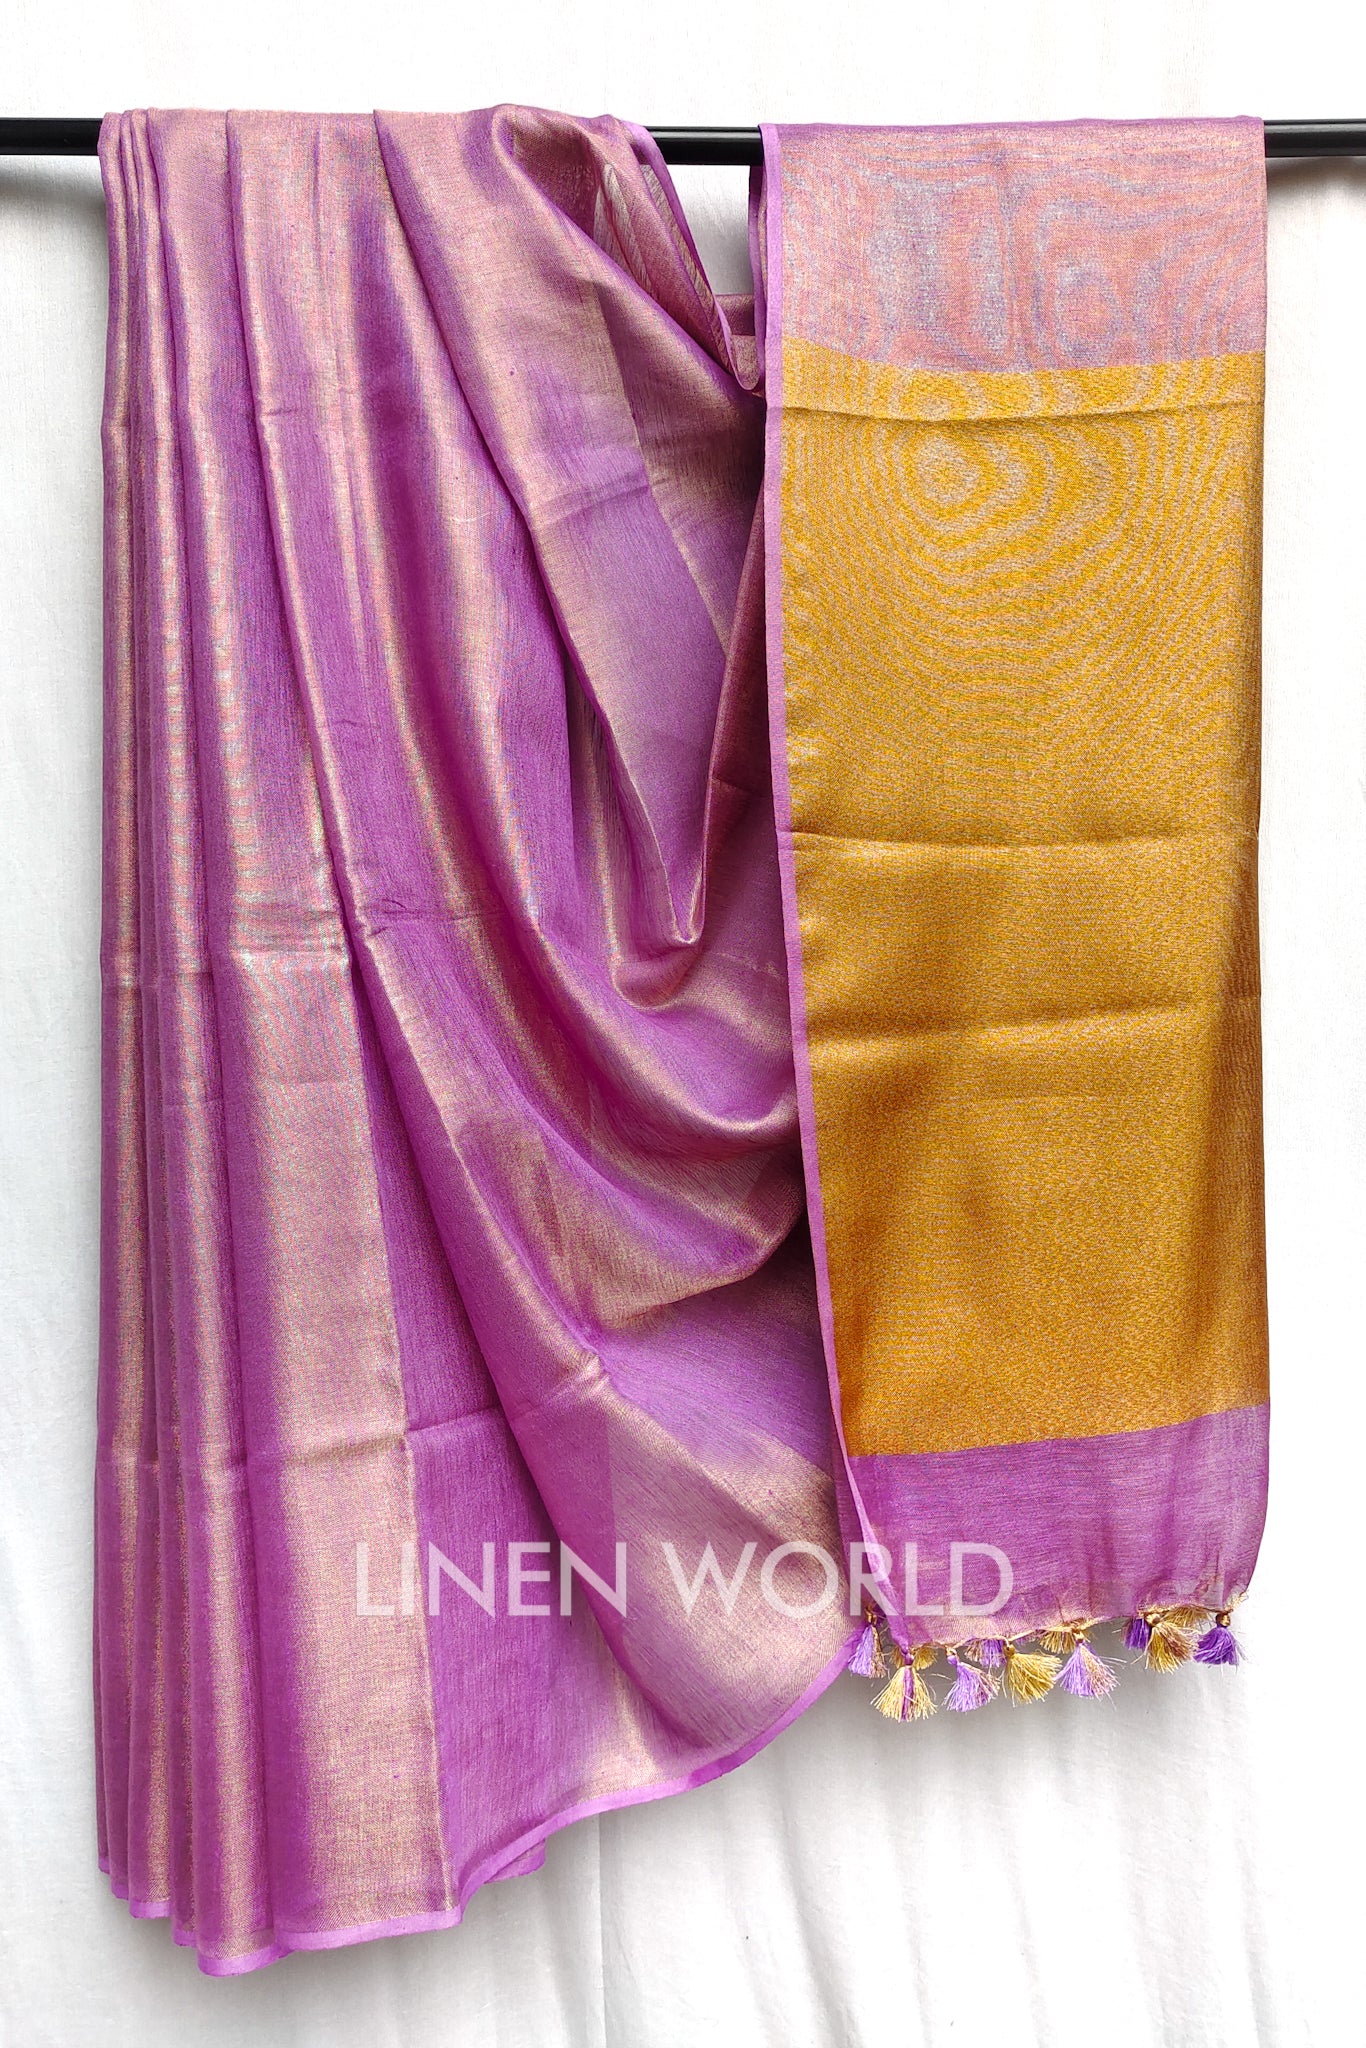 elsie - lavender zari linen sari - linenworldonline.in